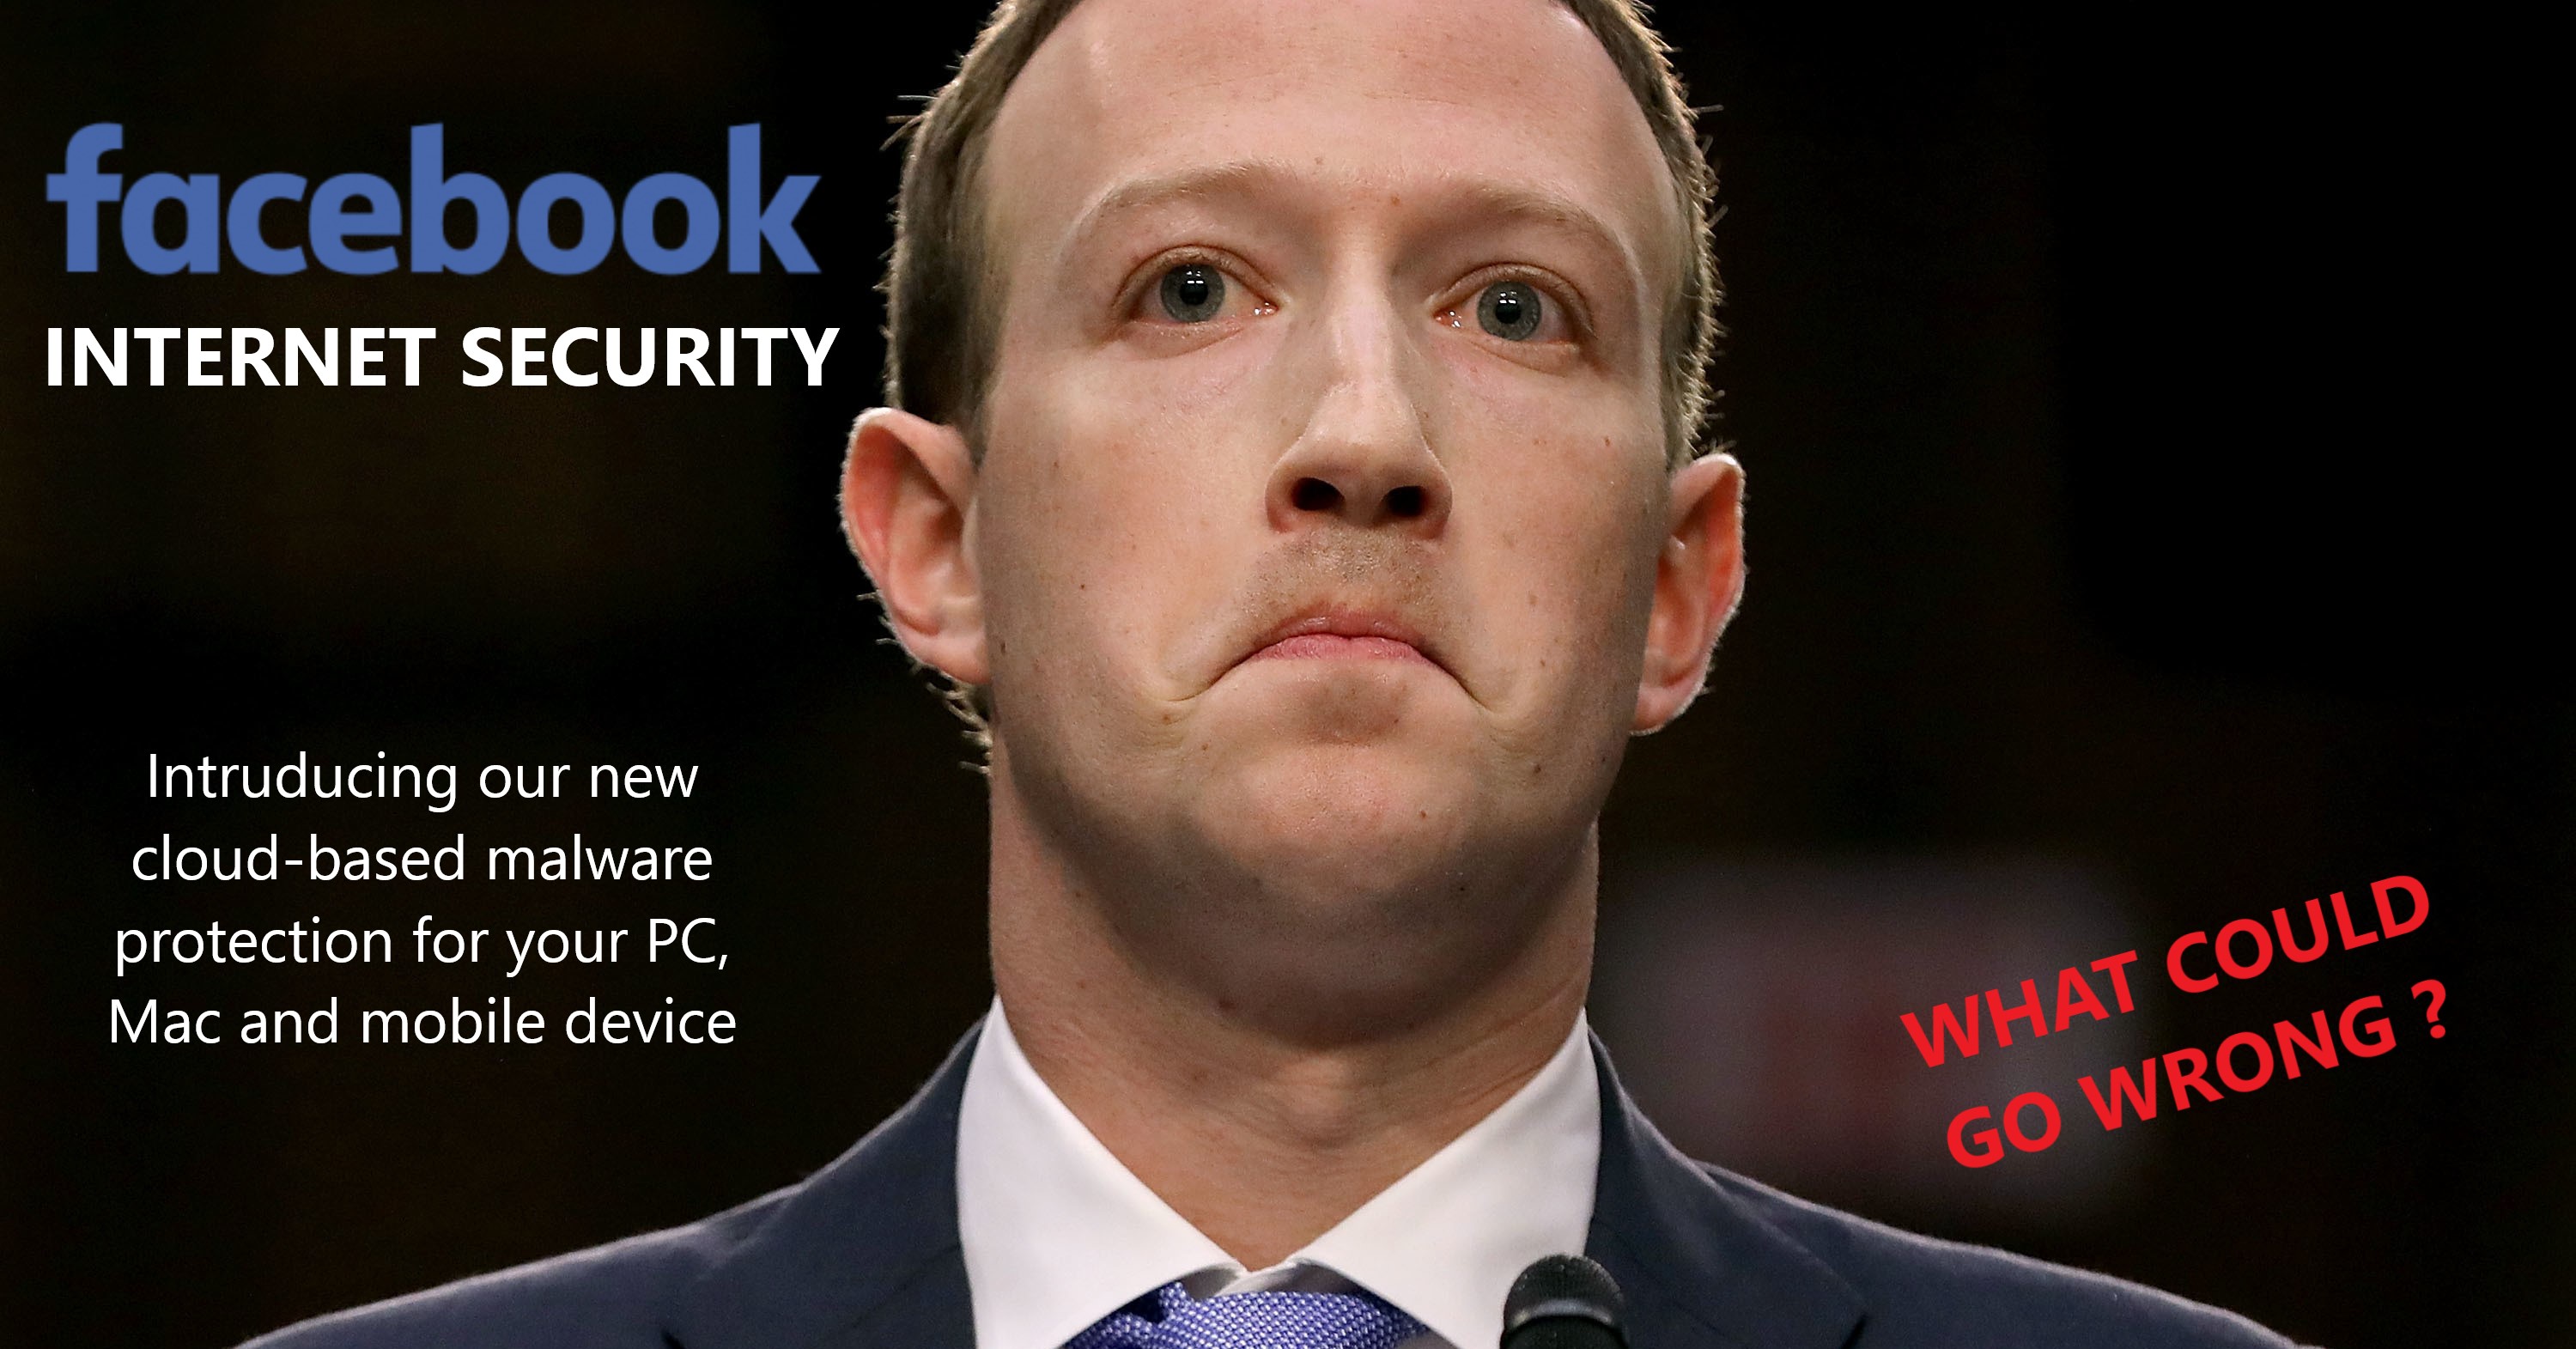 facebook internet security.jpg